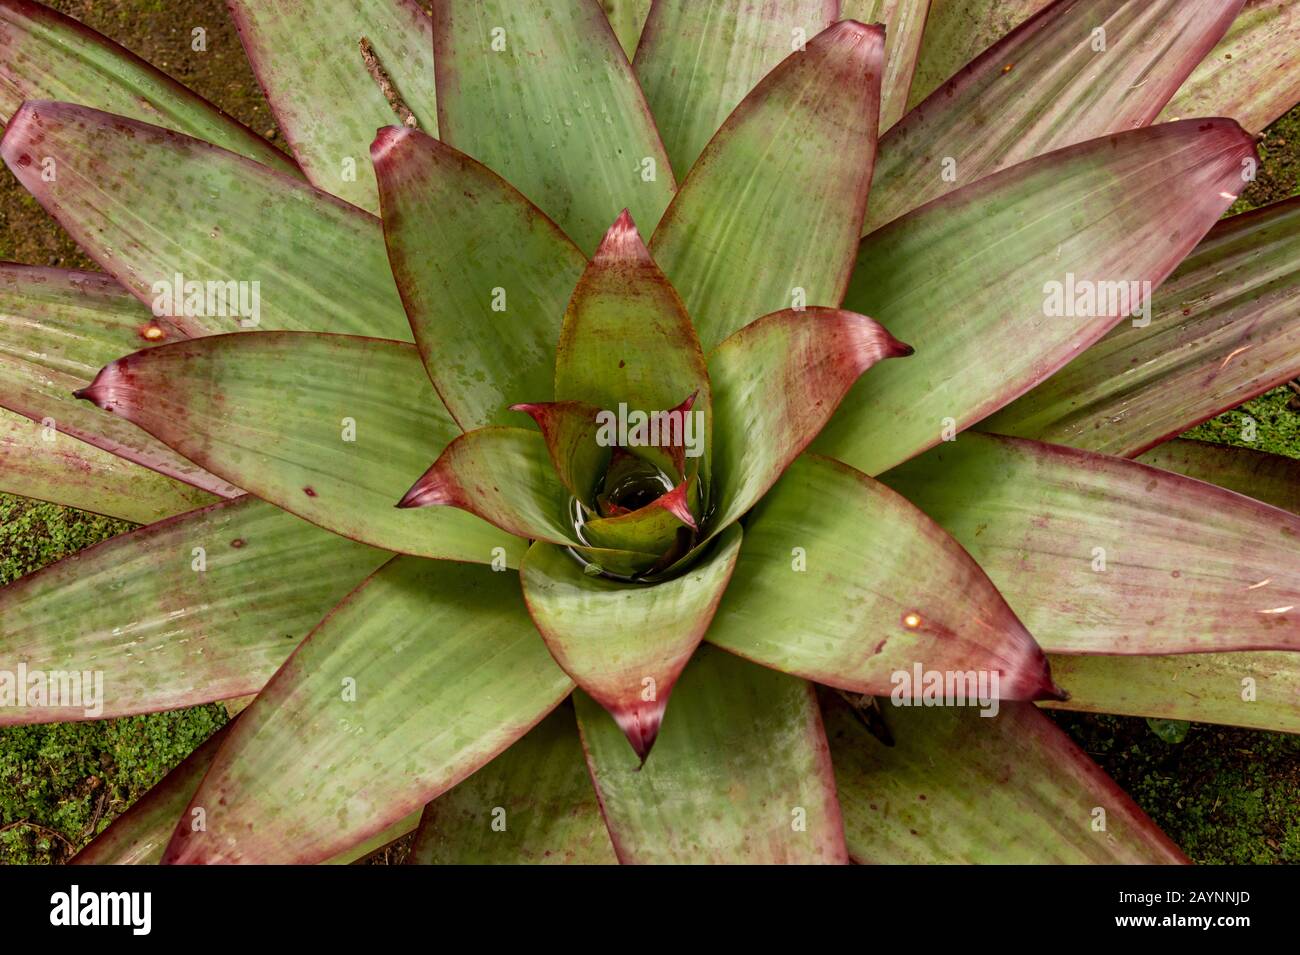 bromeliad plant in an outdoor garden Stock Photo